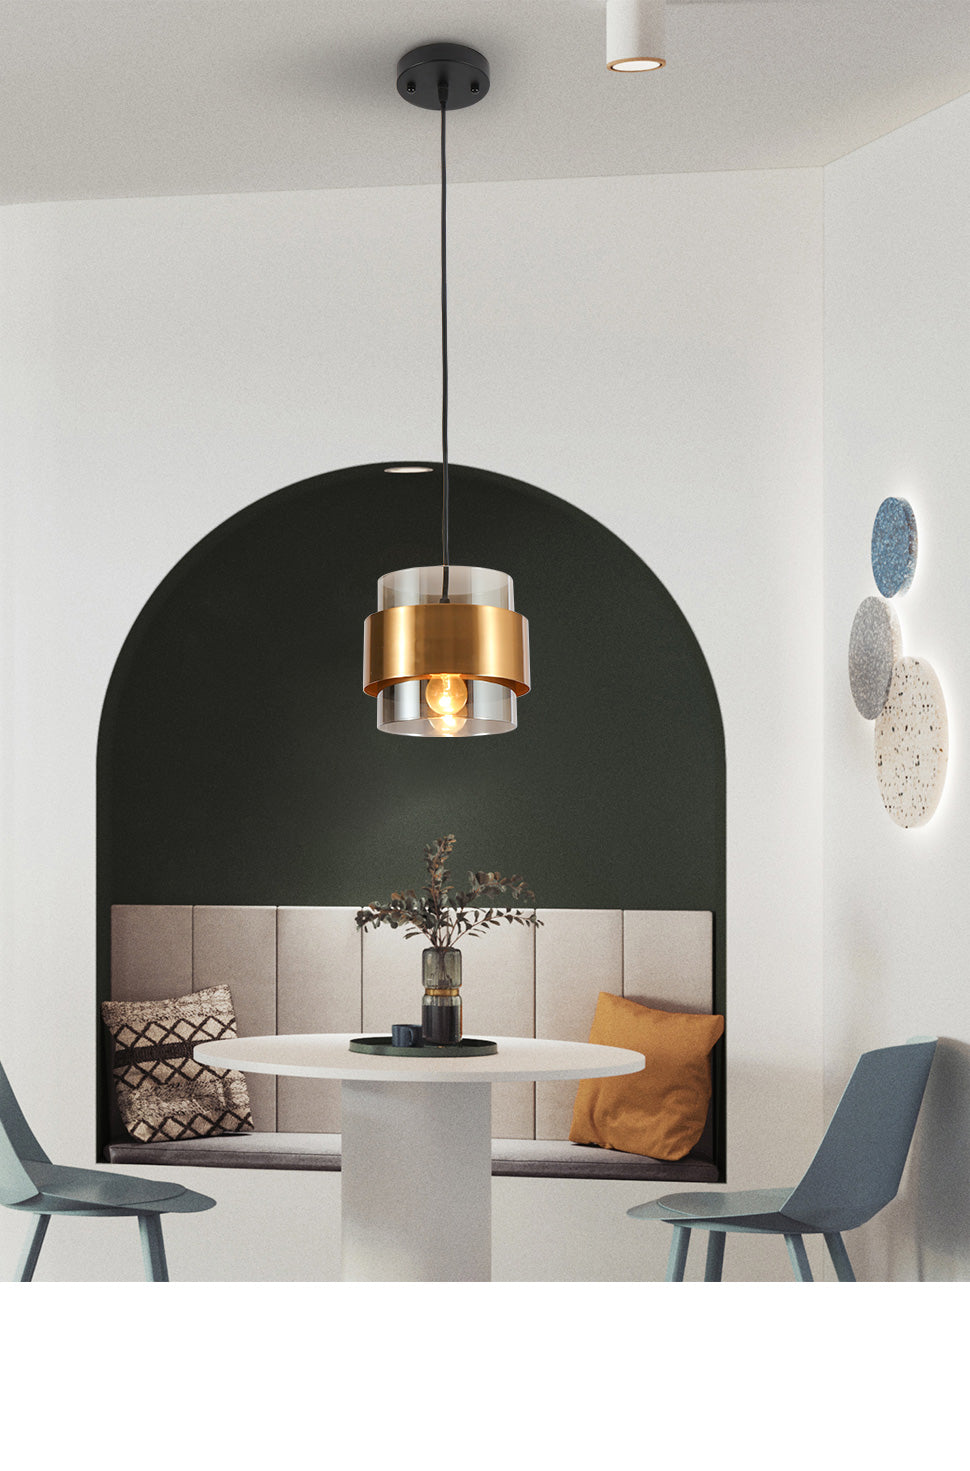 Modern mini pendant lights fixtures Glass island kitchen pendant hanging light